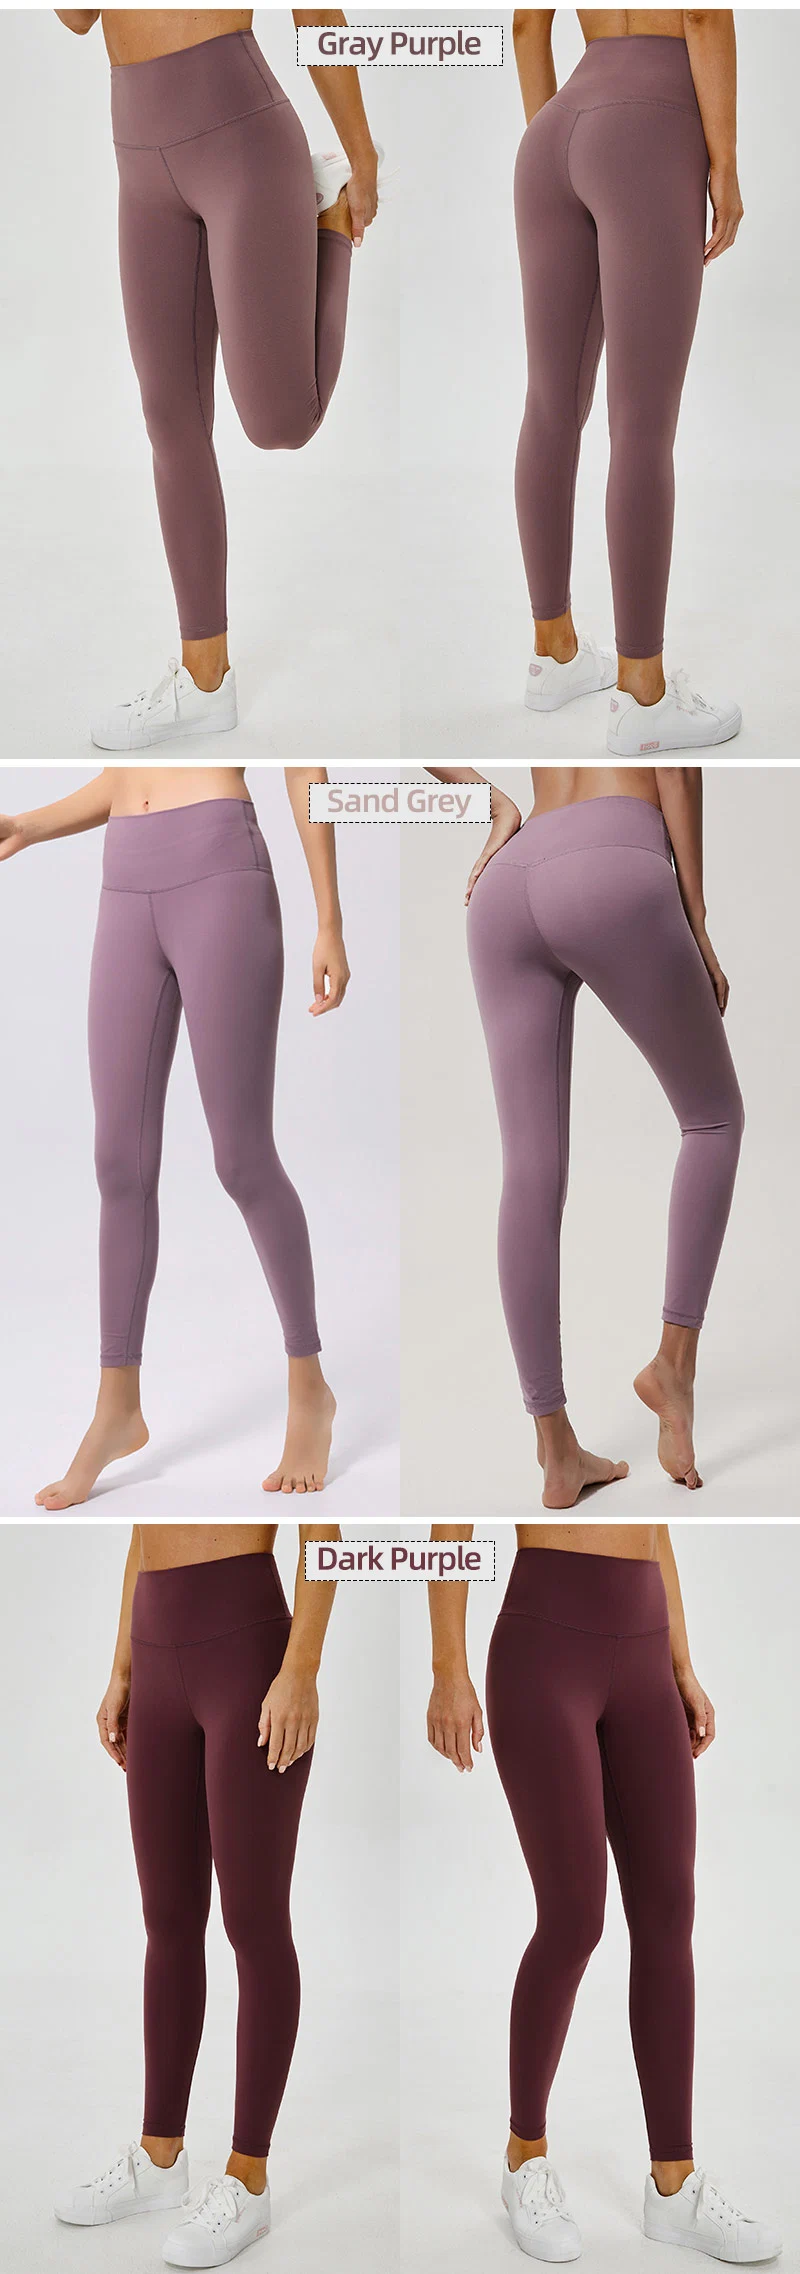 Hot Sale Women 13cm High Waisted Tights Yoga Pants Leggings with Pockets Sexy Nude Custom Fitness/Yoga Gym Wear